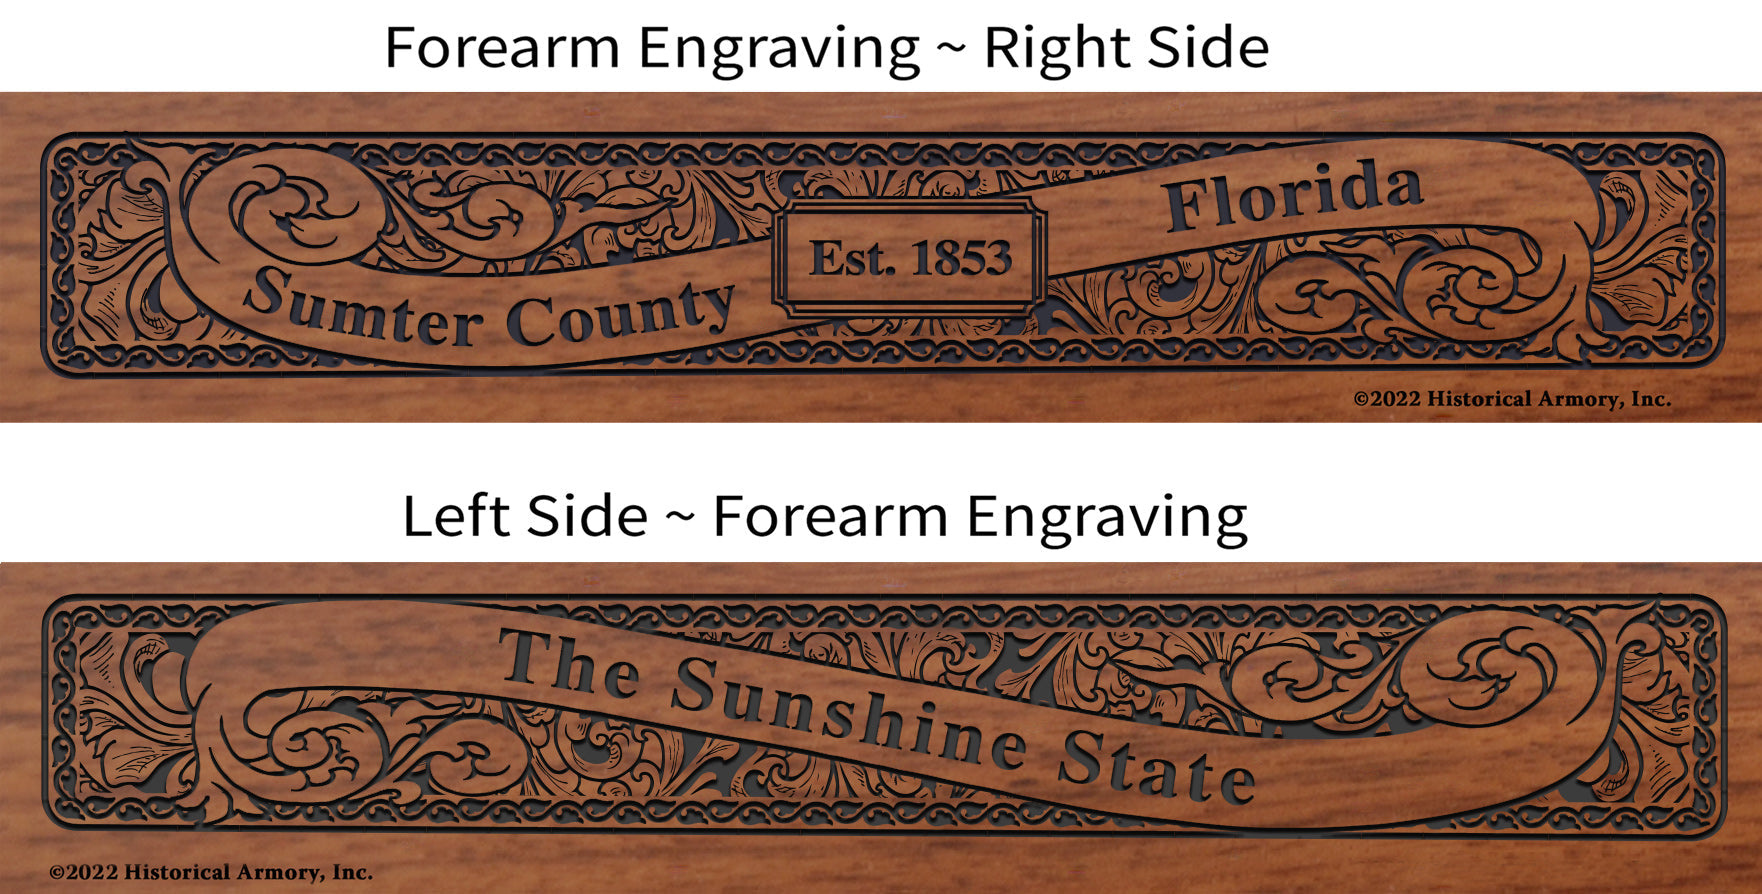 Sumter County Florida Engraved Rifle Forearm